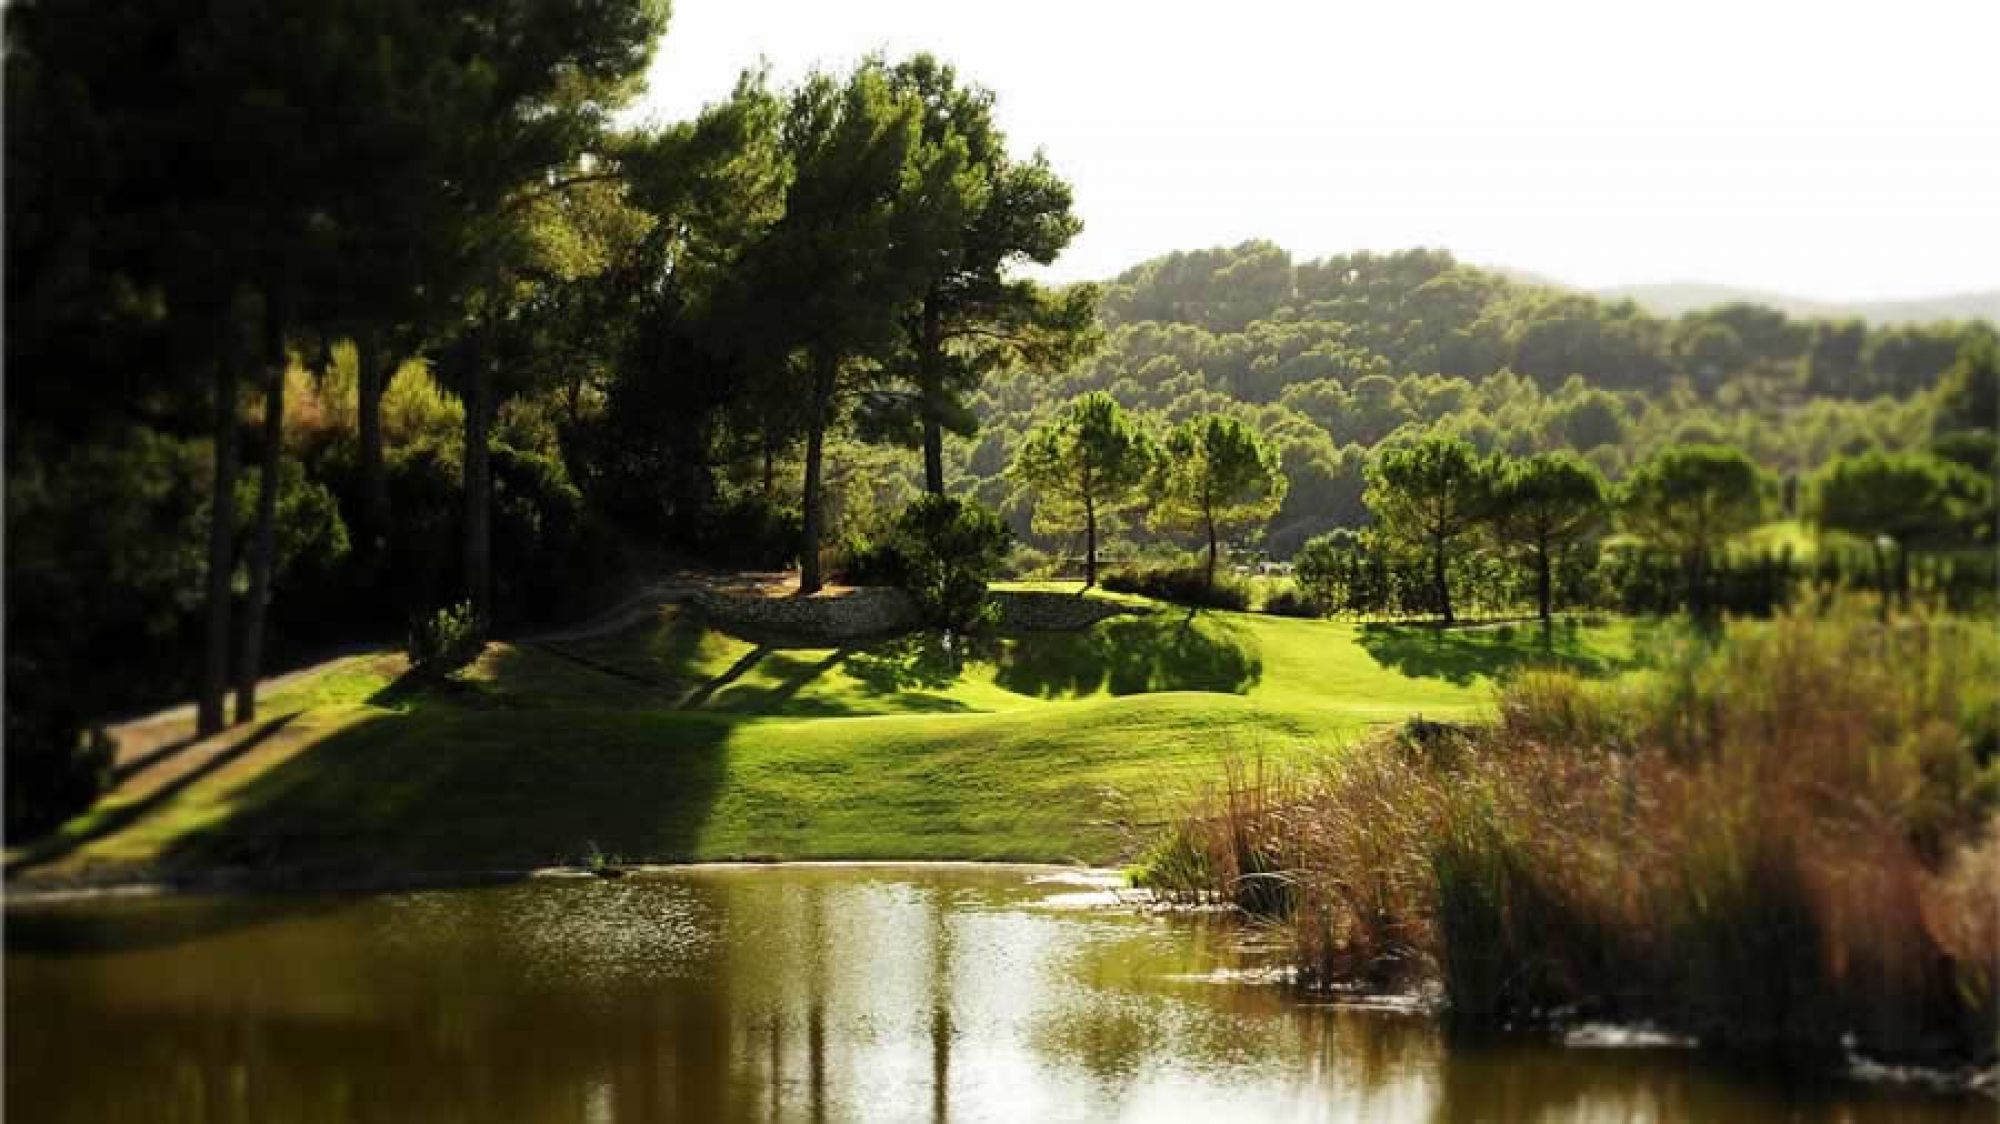 Son Muntaner Golf Course - Arabella Golf features some of the preferred golf course near Mallorca